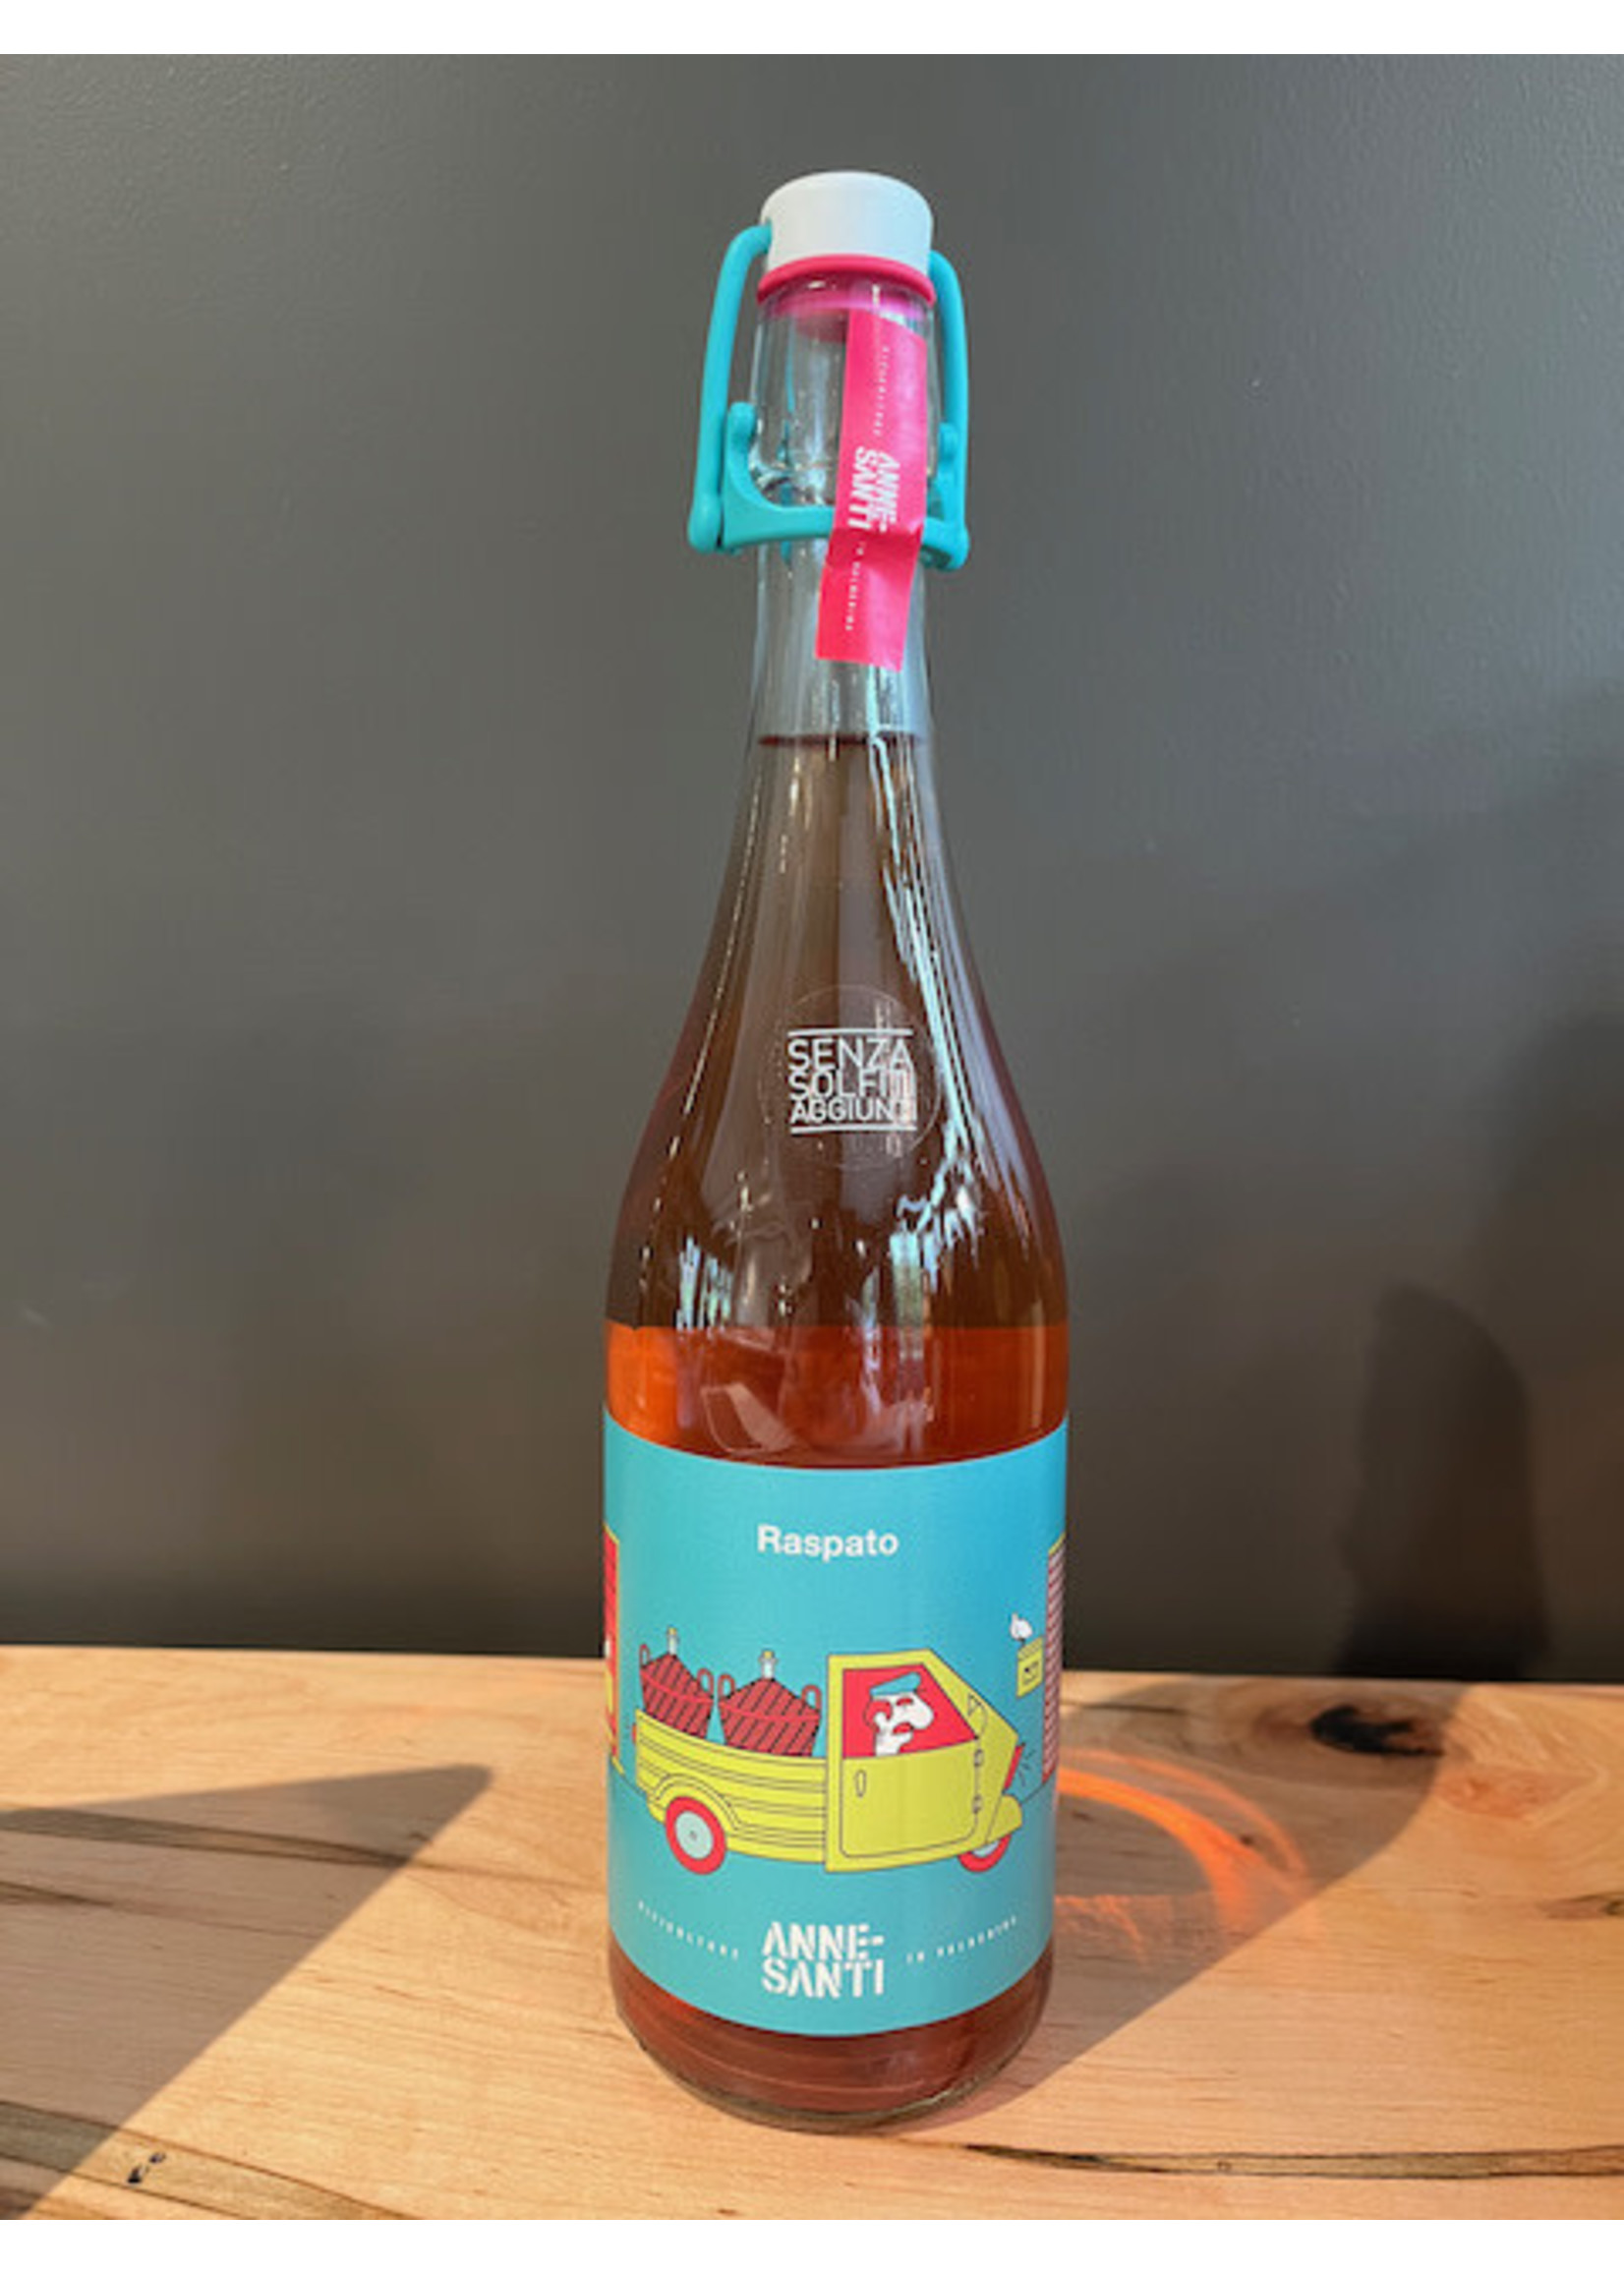 Piedmont Wine Imports Annesanti - "Raspato" Sparkling Rosé 2020